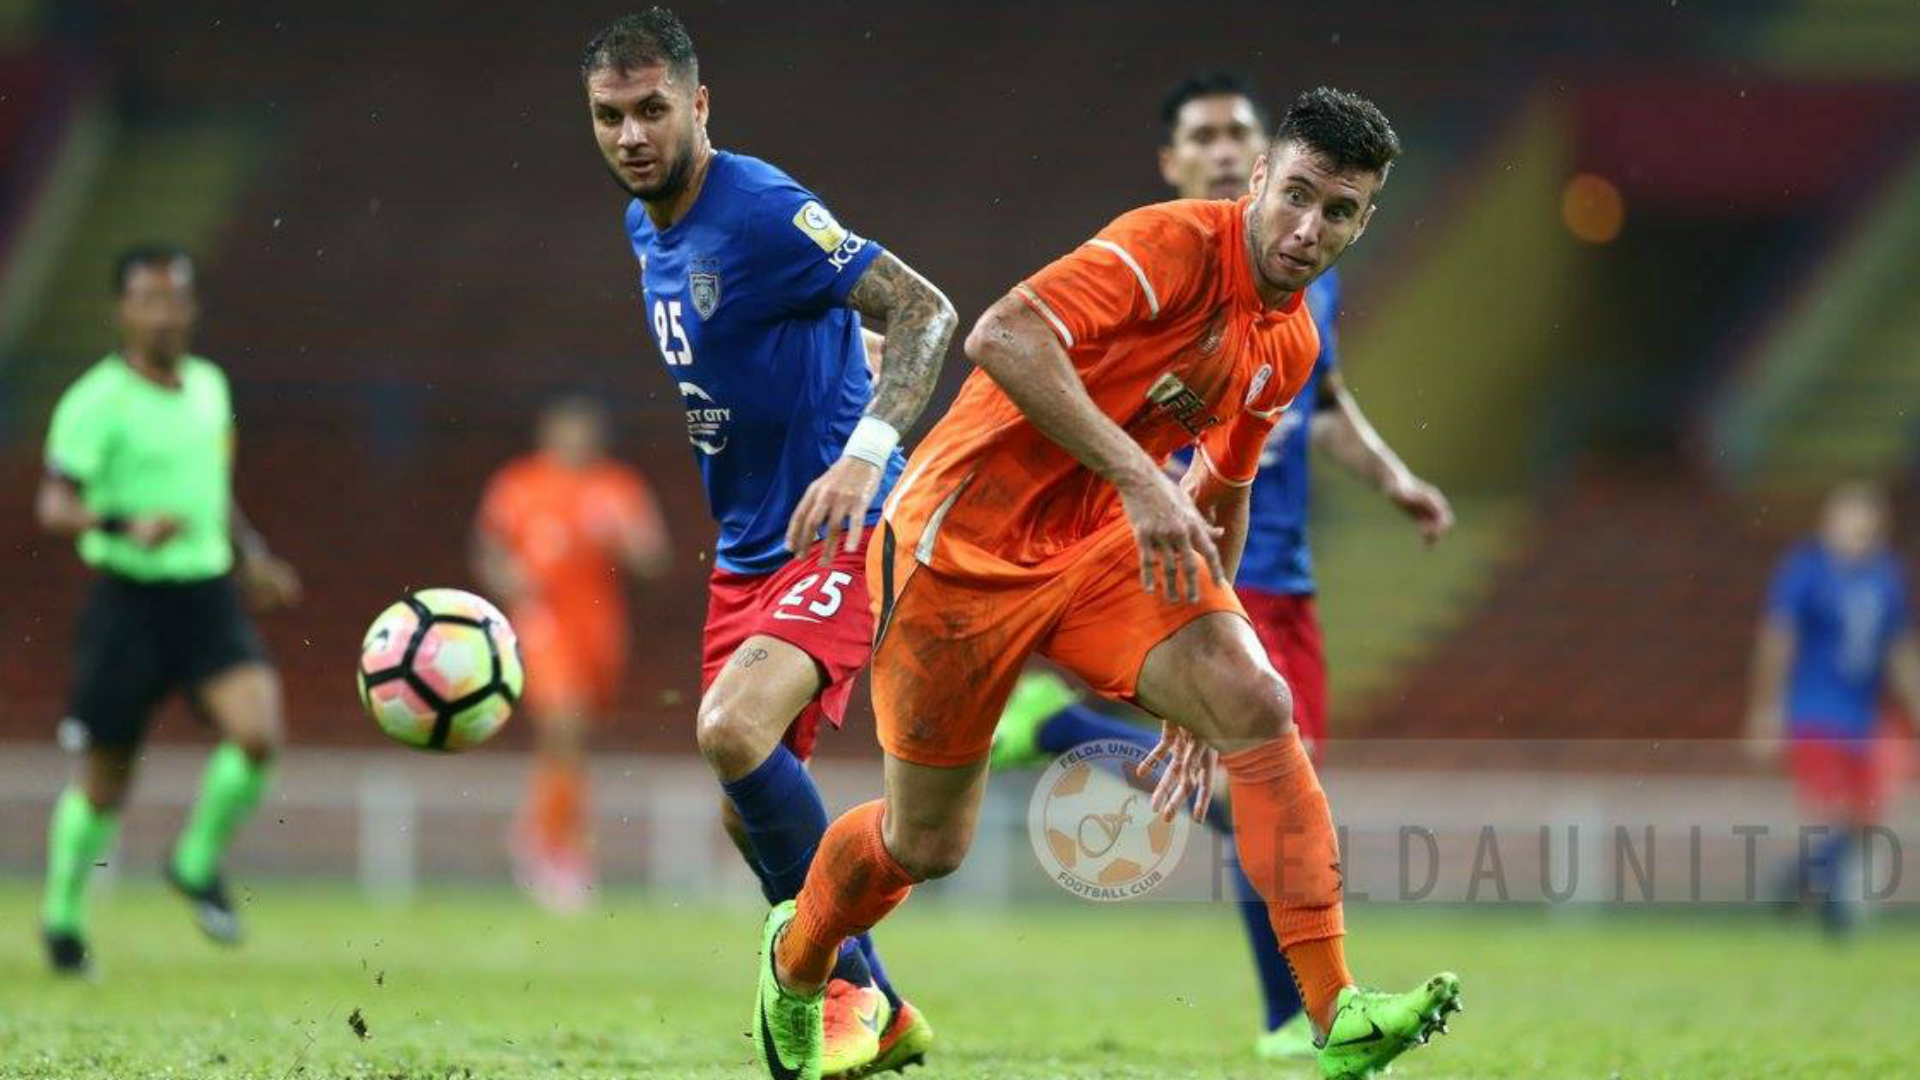 Junior Eldstal, ,Johor Darul Ta'zim, Thiago Augusto, Felda United, Super League